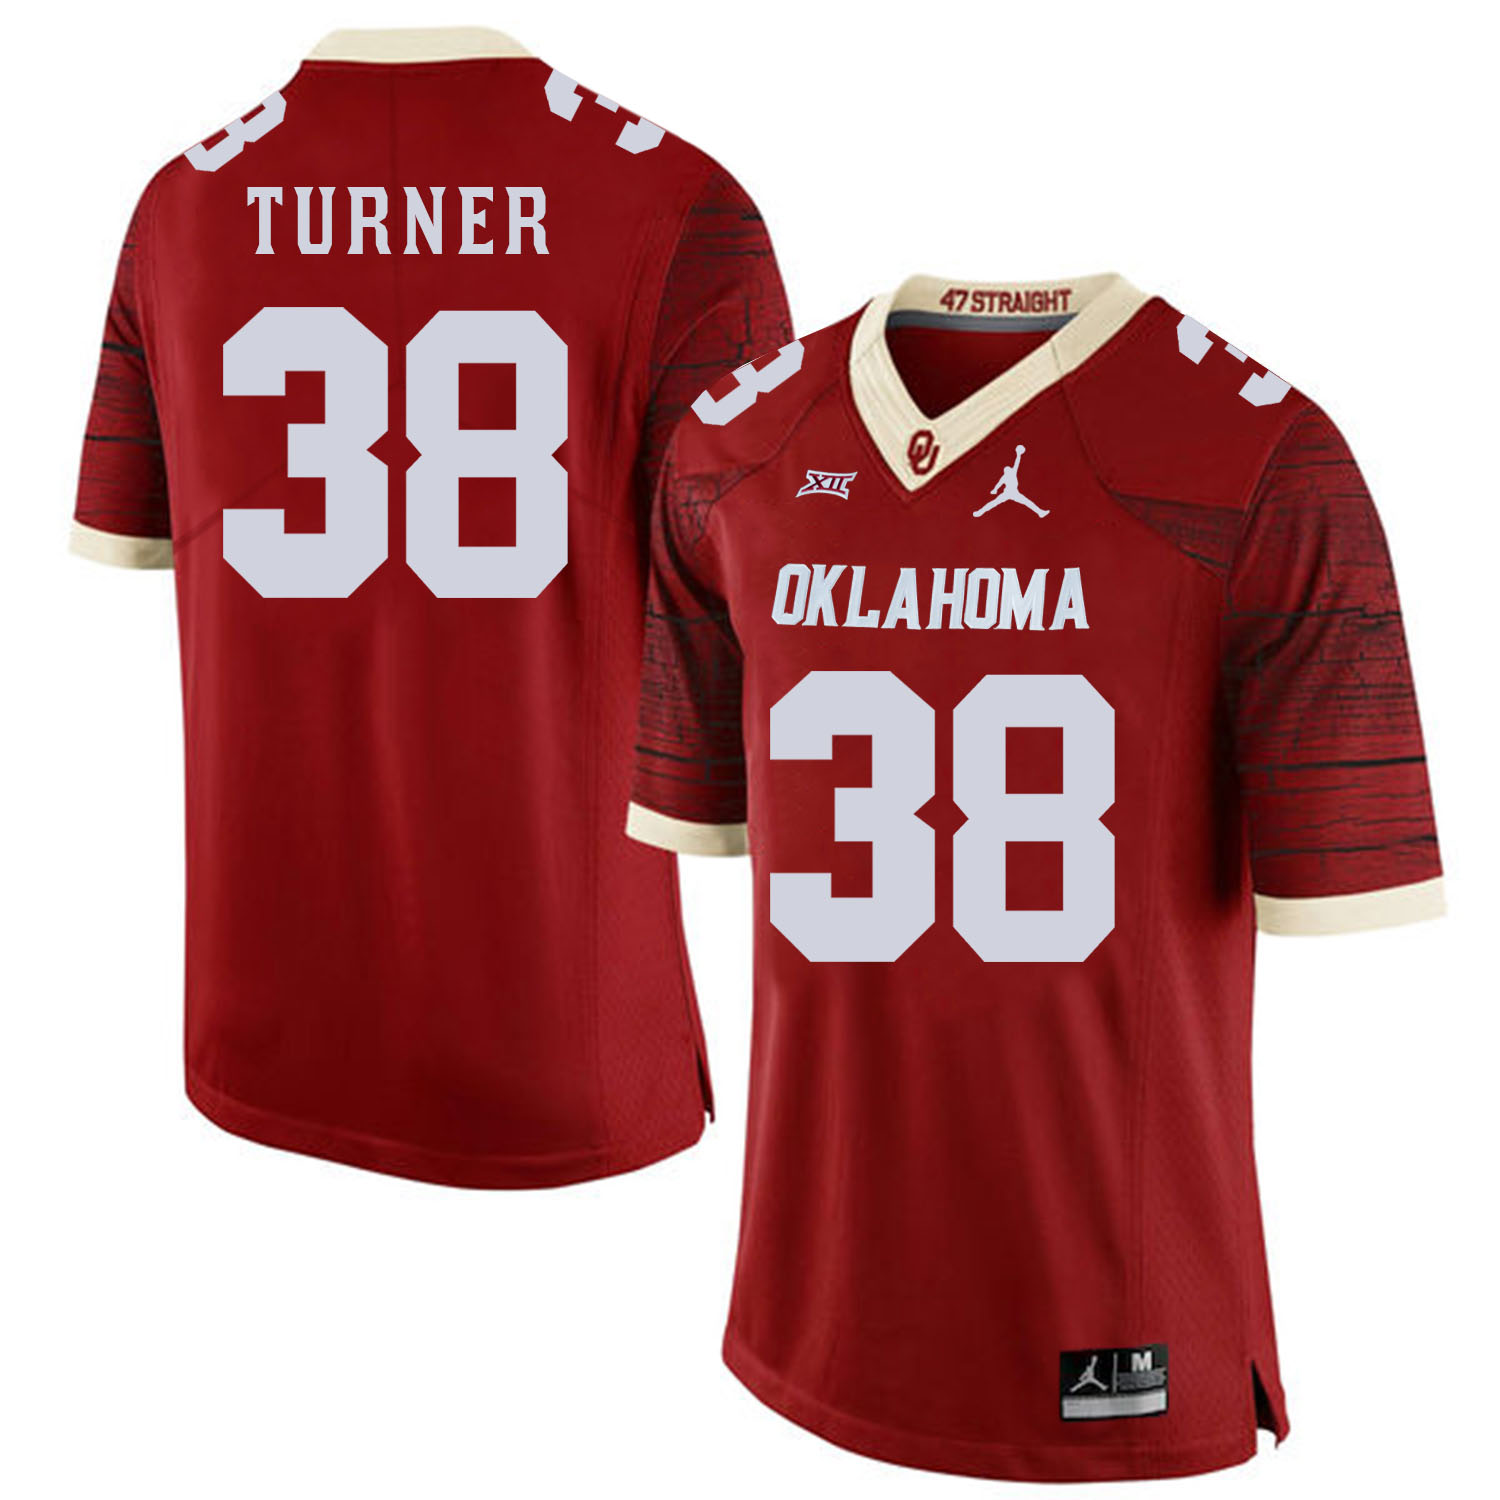 Oklahoma Sooners 38 Reggie Turner Red 47 Game Winning Streak College Football Jersey - Click Image to Close